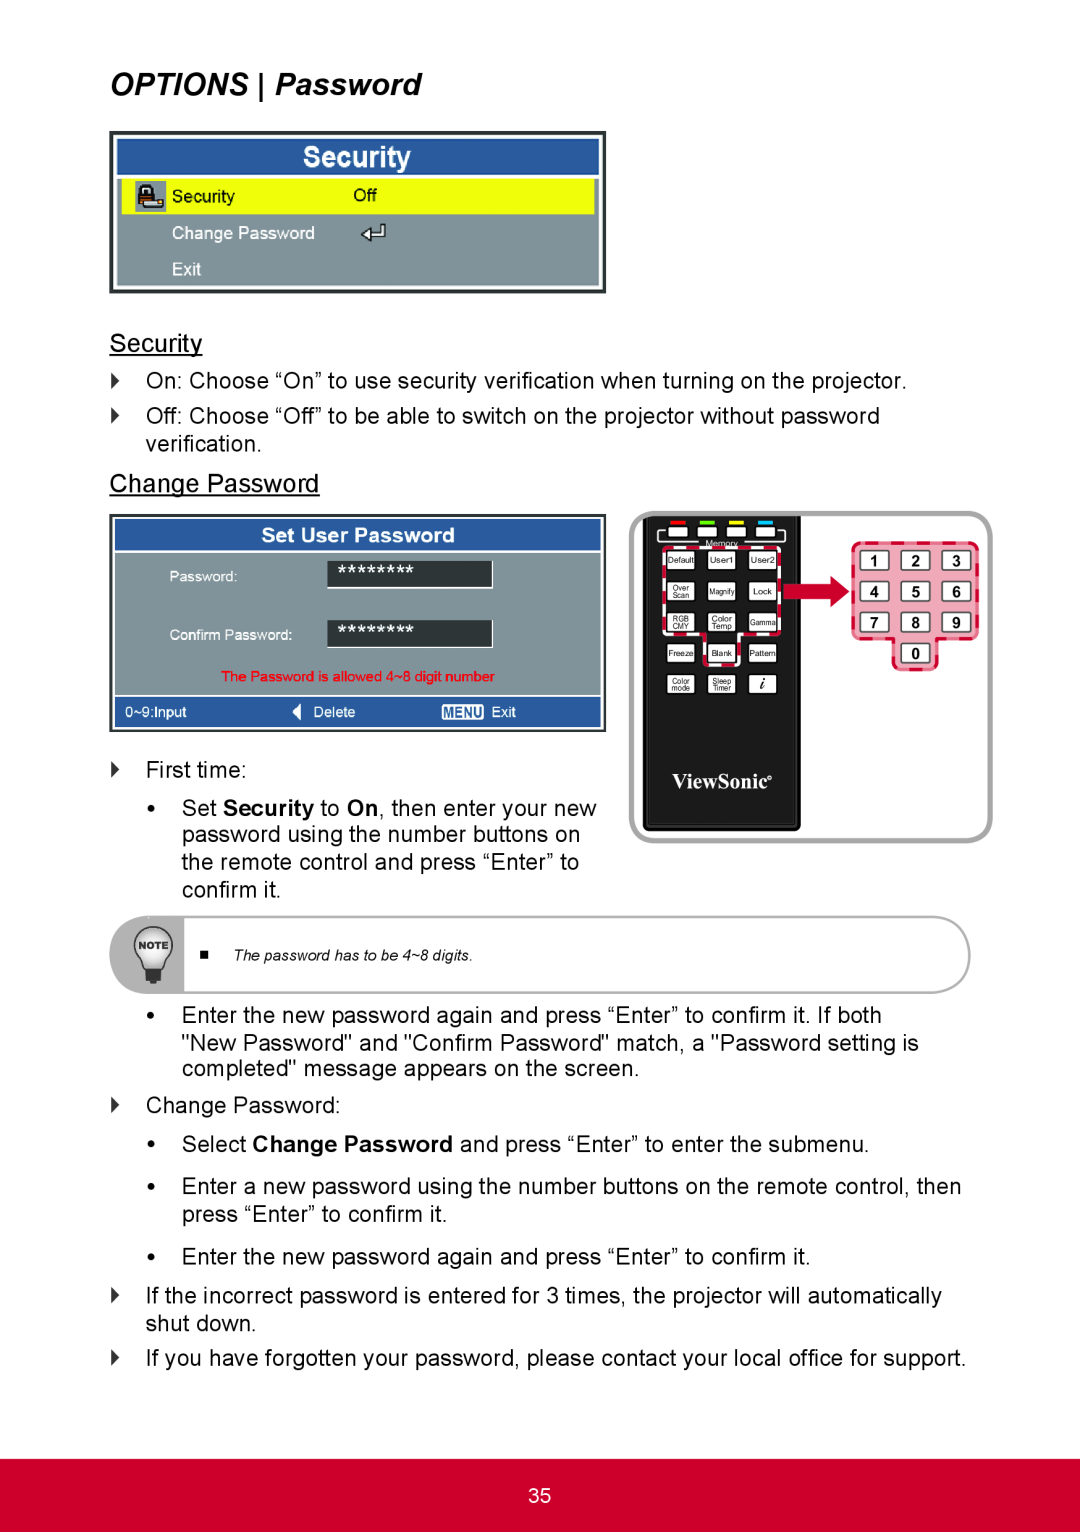 ViewSonic PRO9000 warranty OPTIONS Password, Security, Change Password 